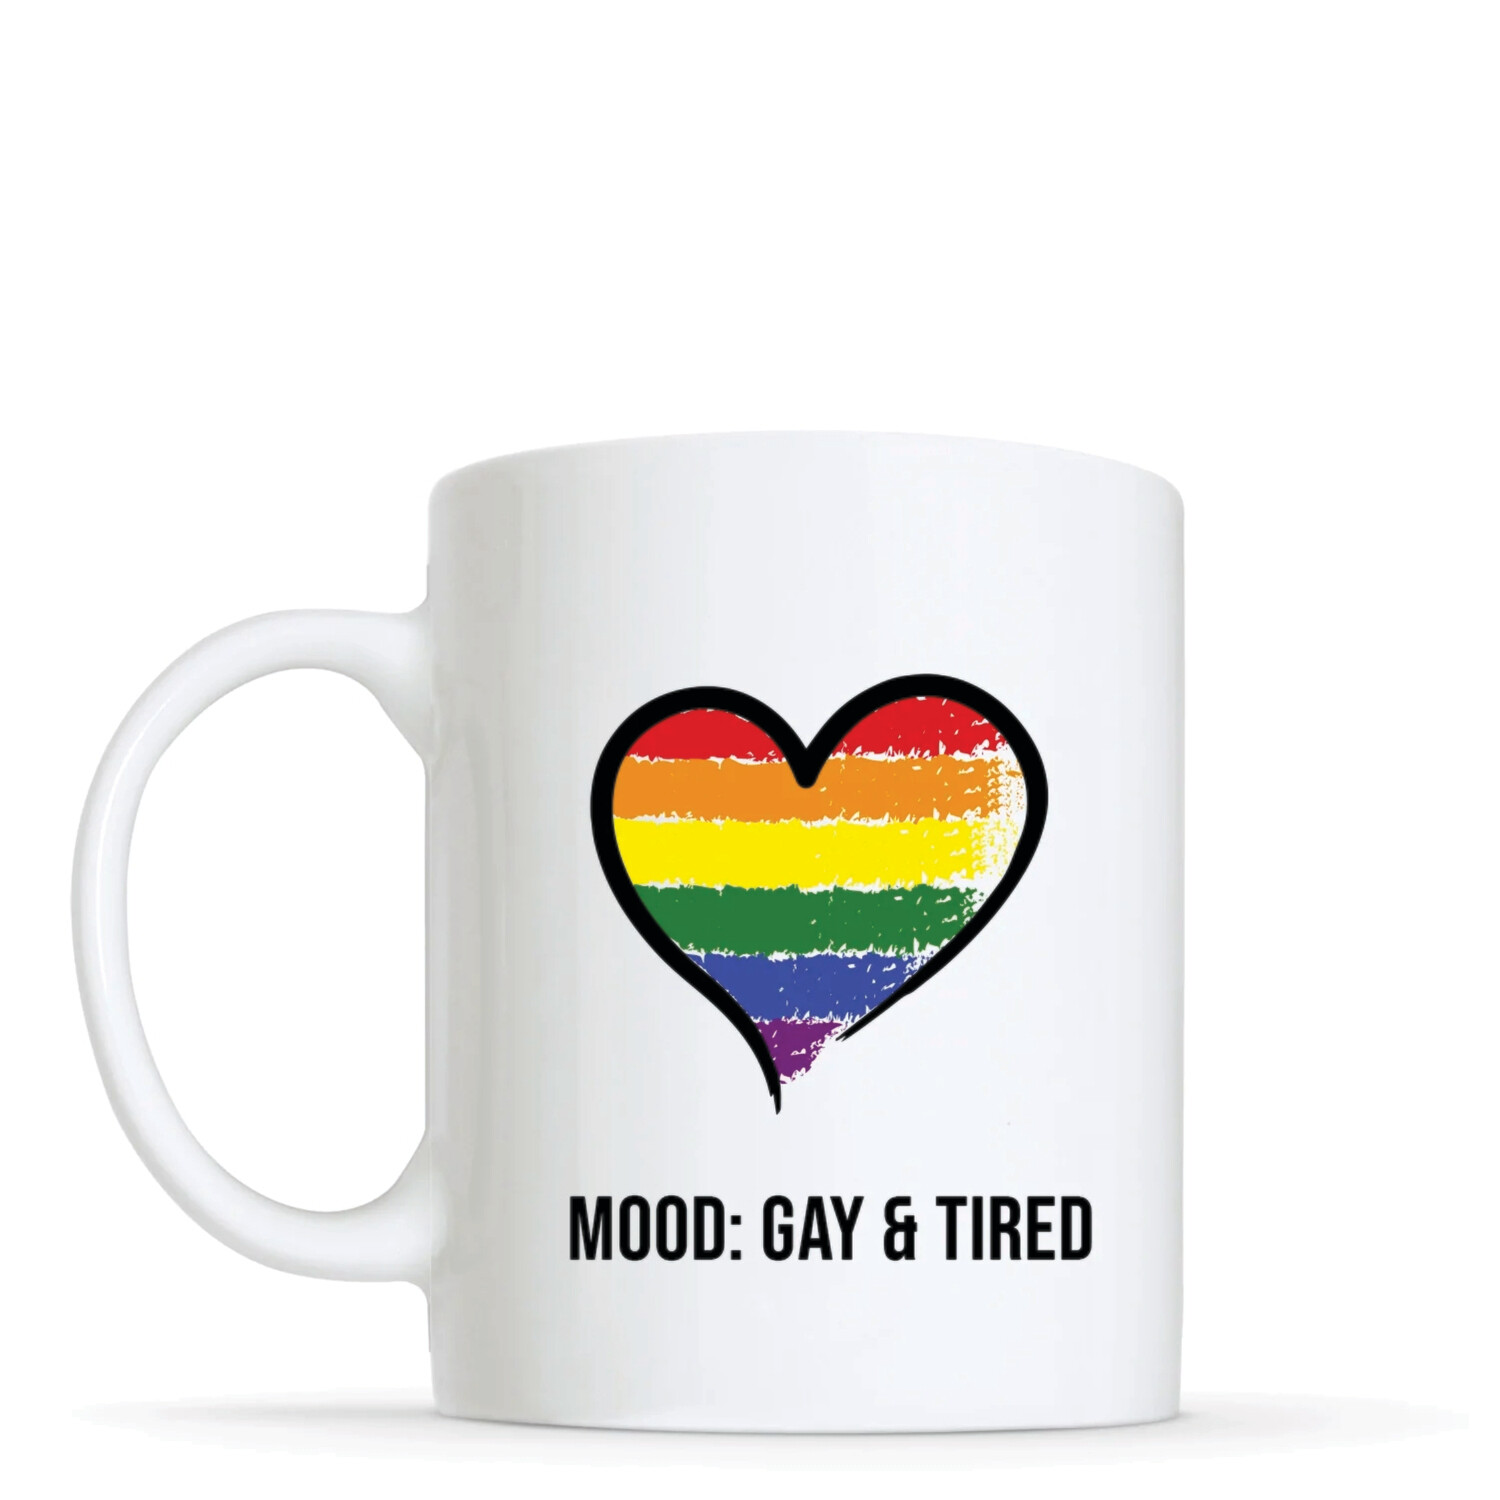 Mood: Gay & Tired - LGBTQ+ (Rainbow) Flag Heart Shape Mug